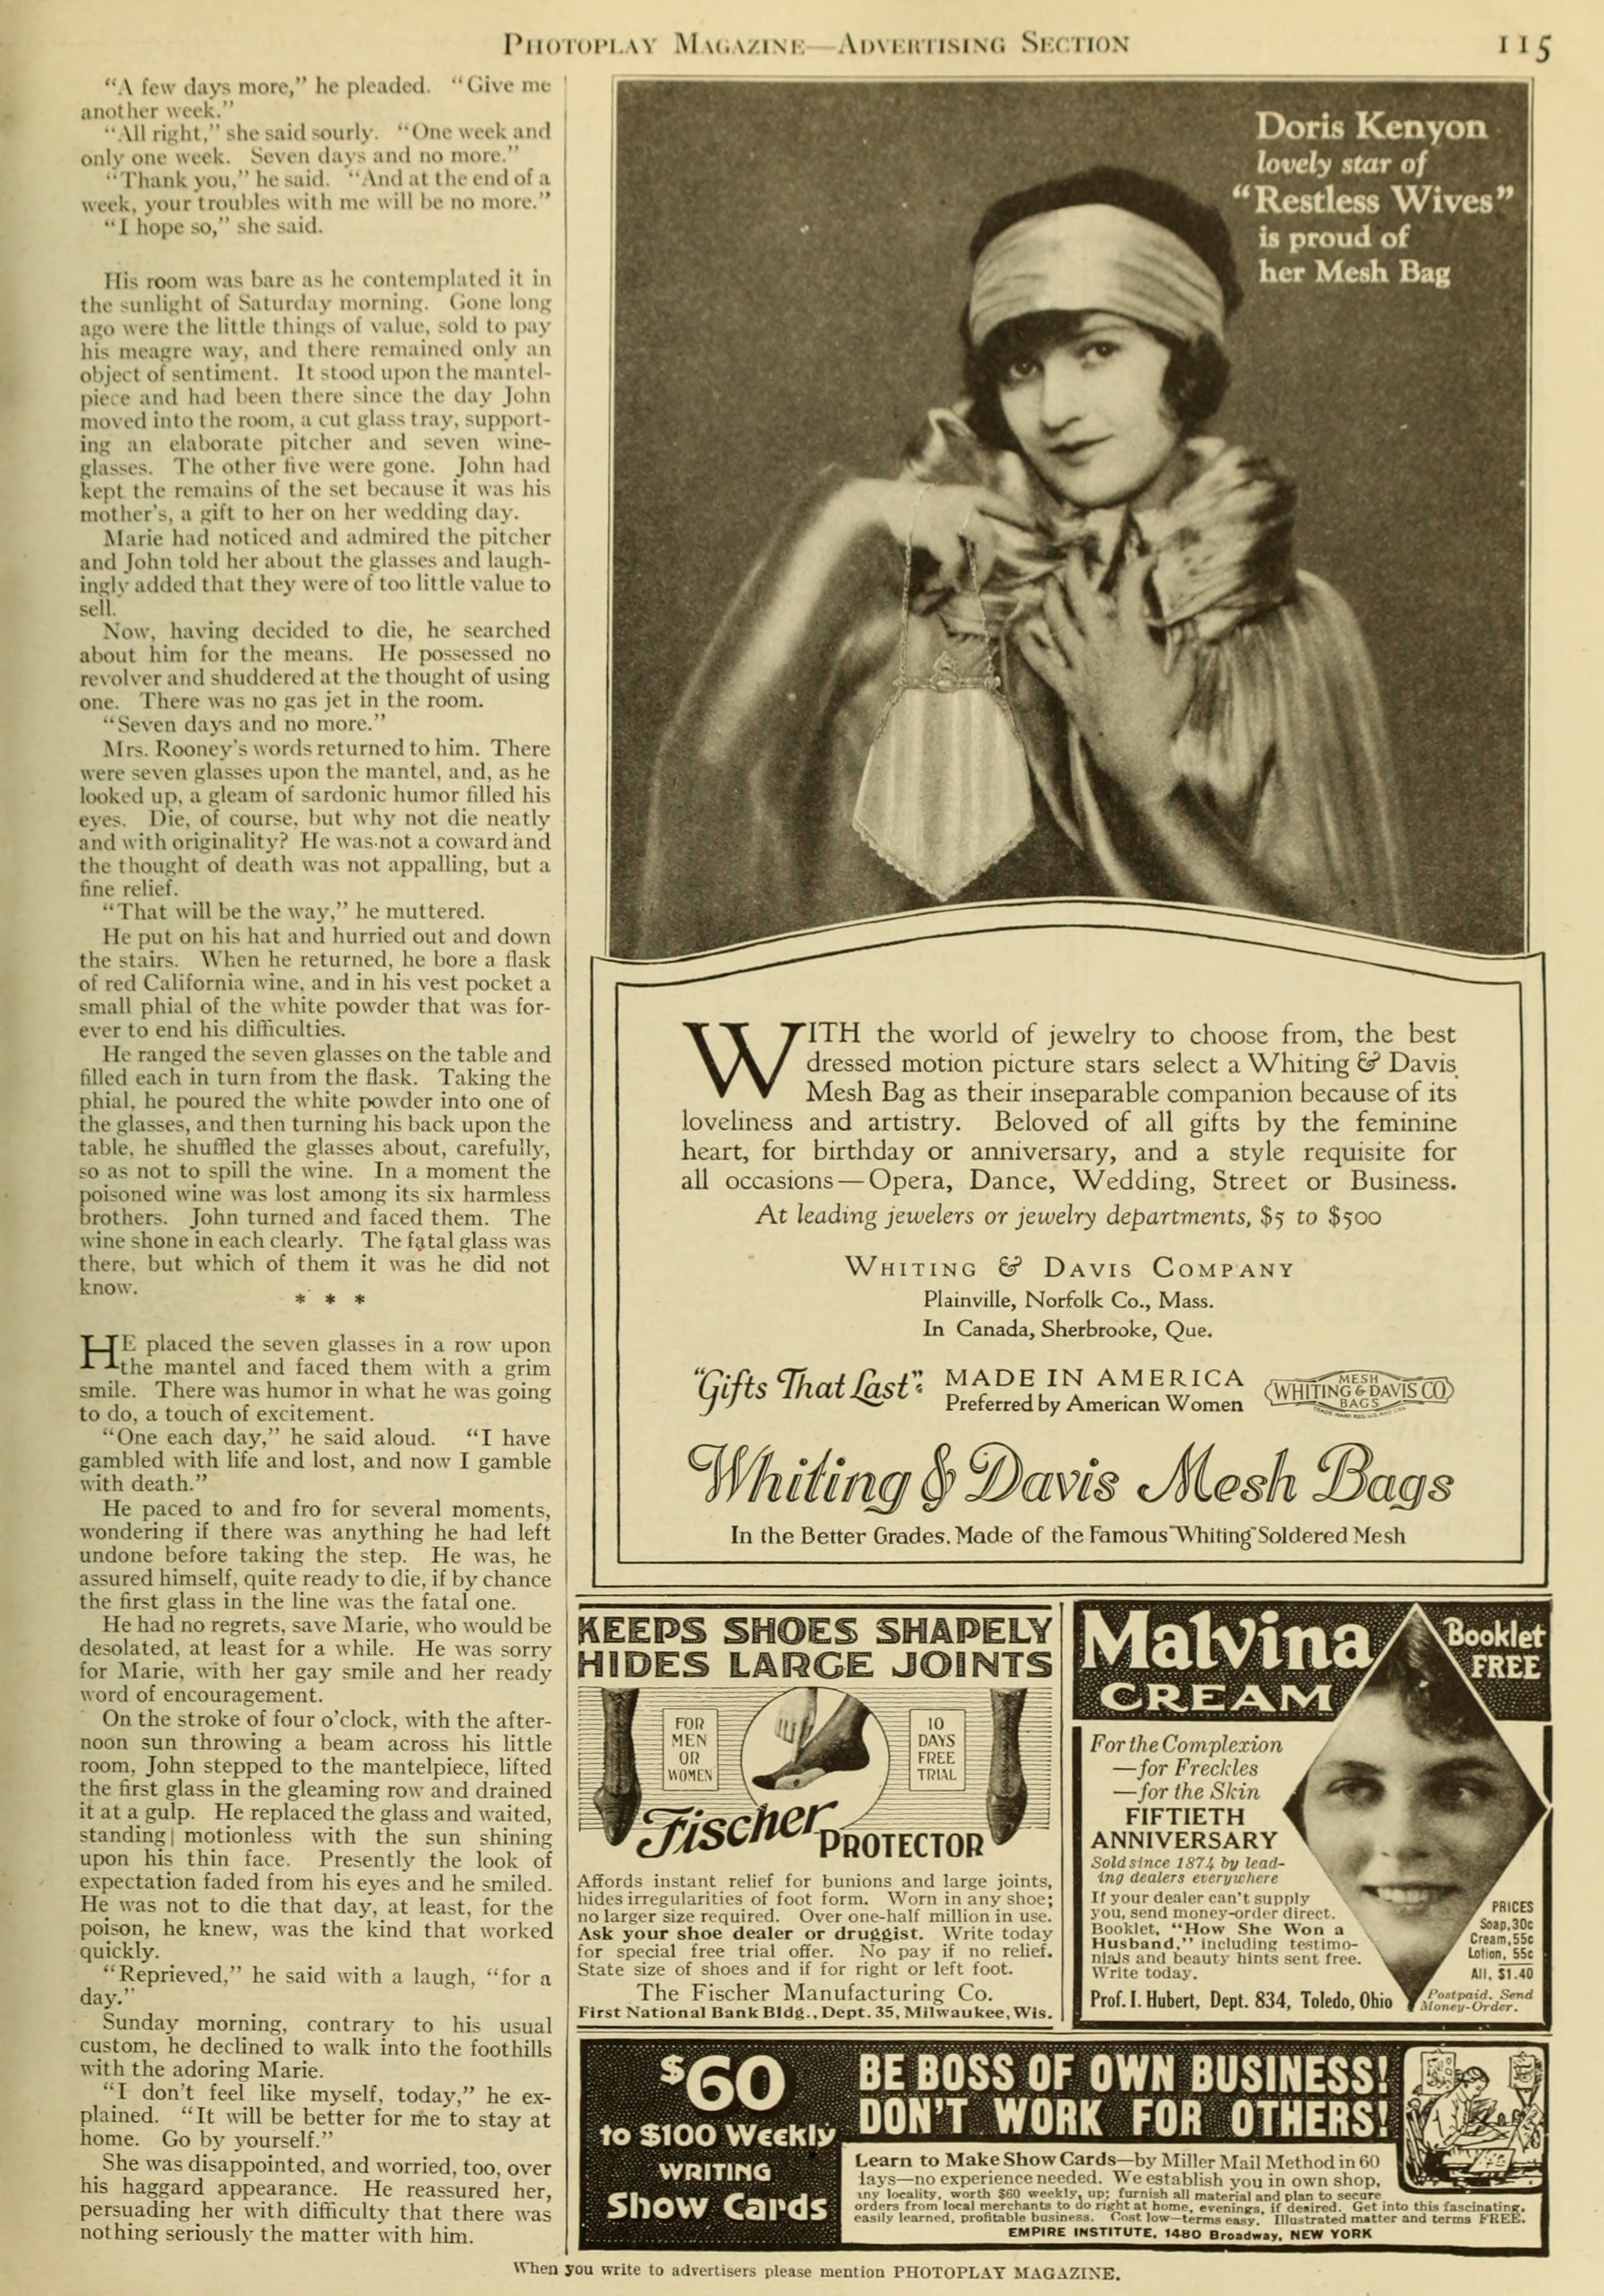 Restless Wives (1924) | www.vintoz.com